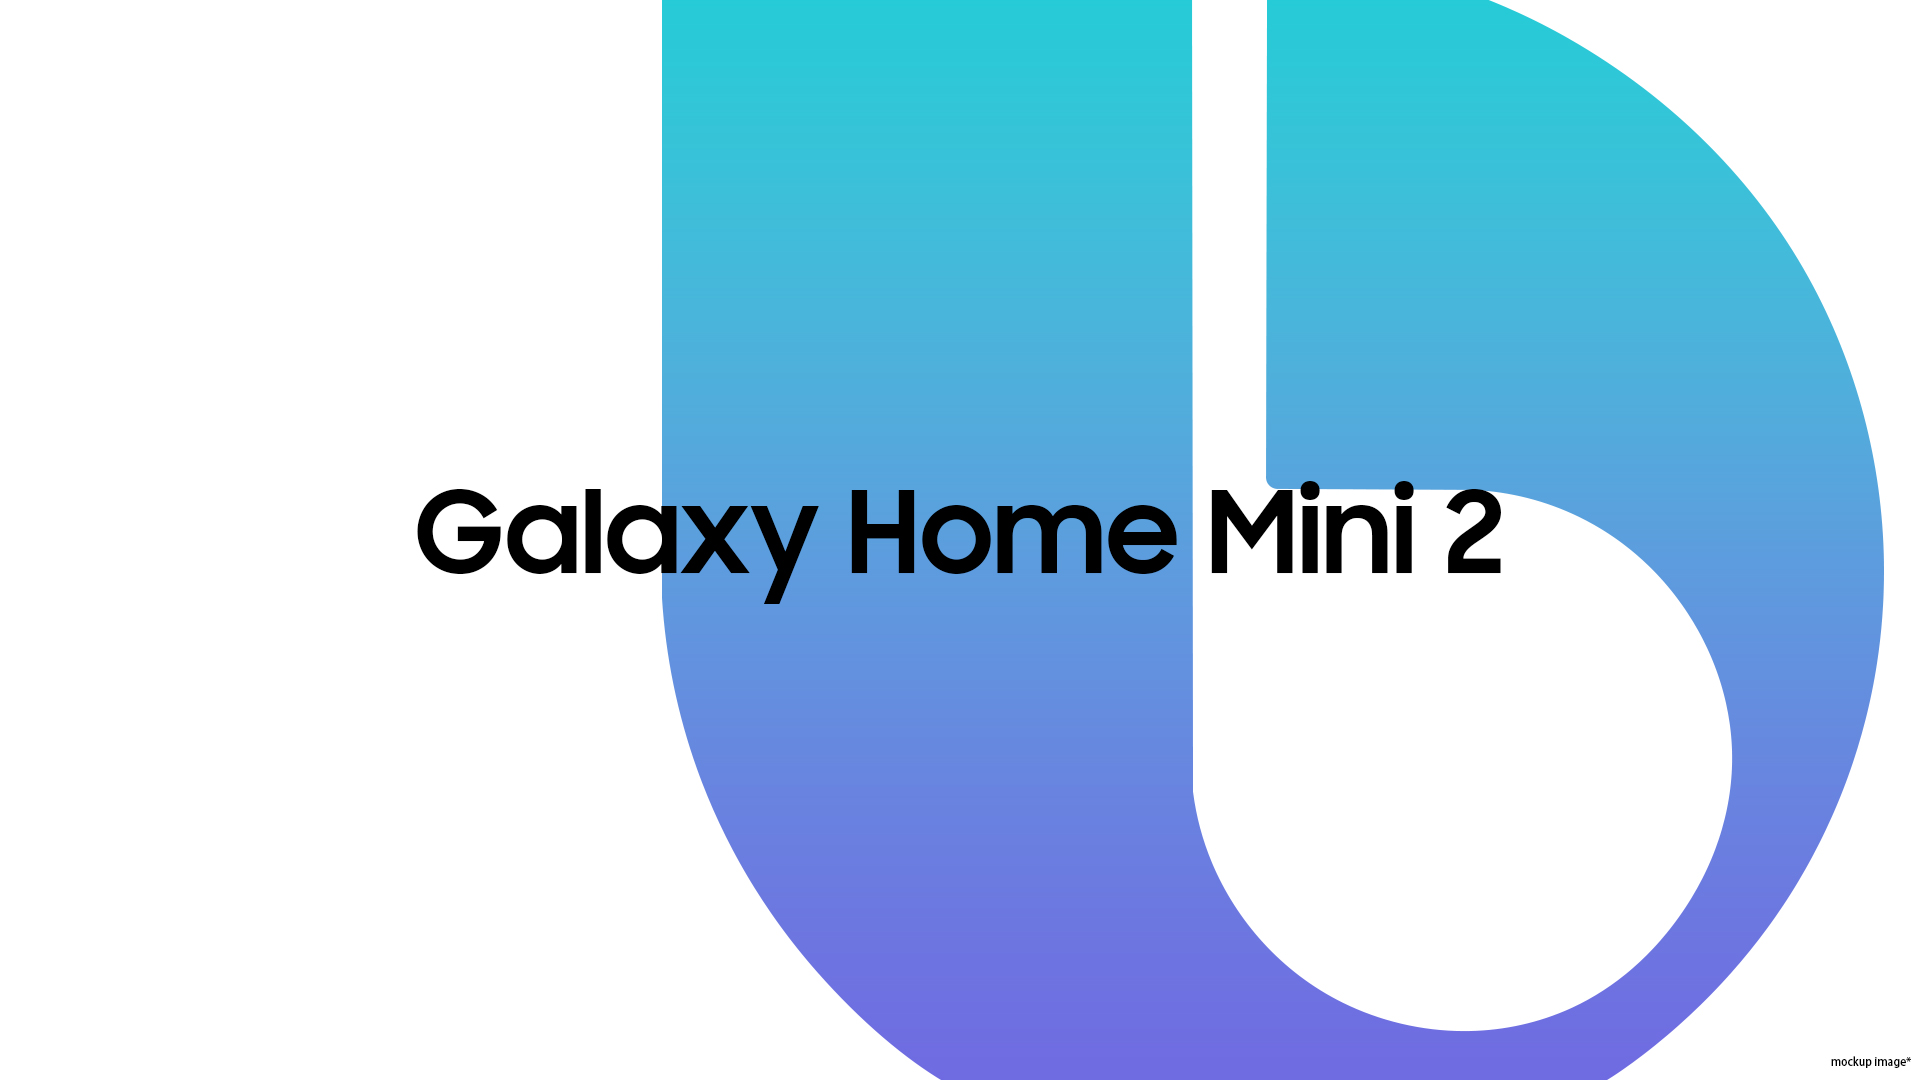 Insider: Samsung is working on a smart speaker Galaxy Home Mini 2